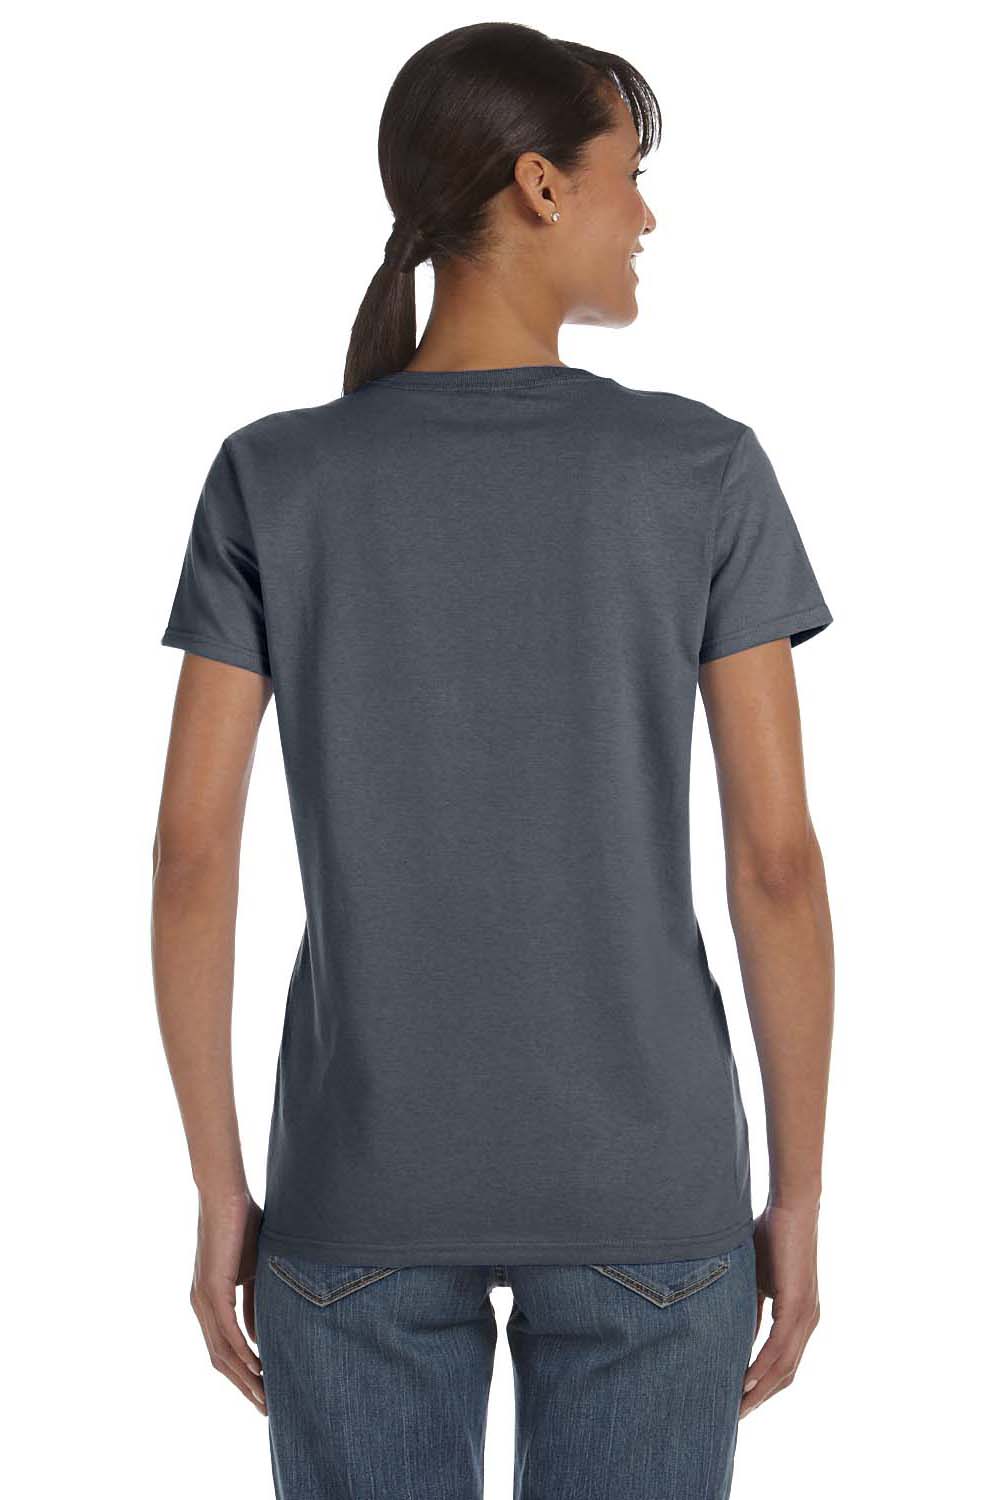 Gildan G500L Womens Short Sleeve Crewneck T-Shirt Heather Dark Grey Back